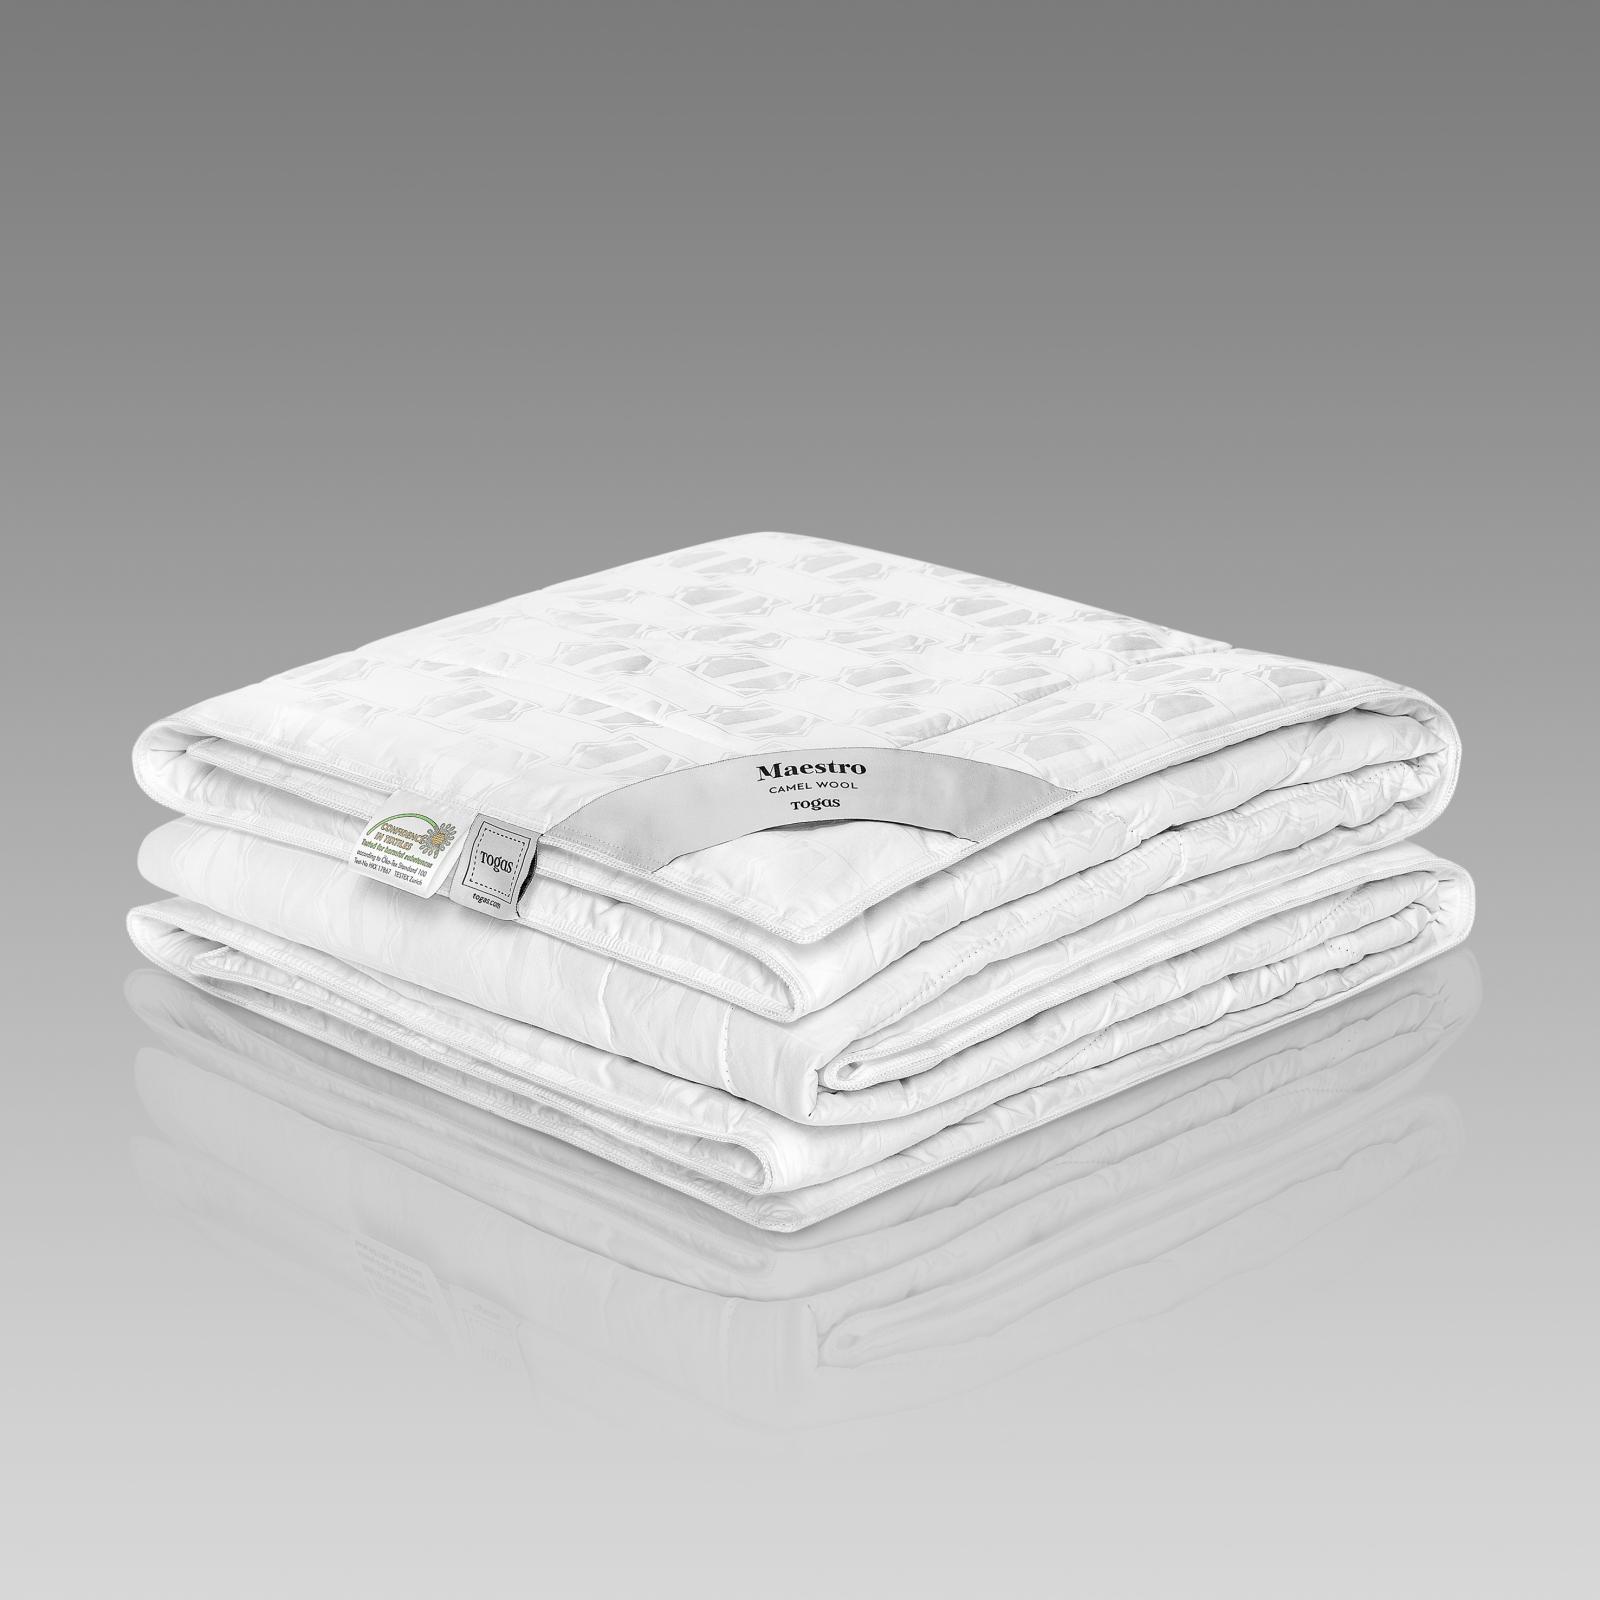 Одеяло Togas Маэстро белое 140х200 см (20.04.17.0088) одеяло marc anri barr белое 140х200 см ma dc